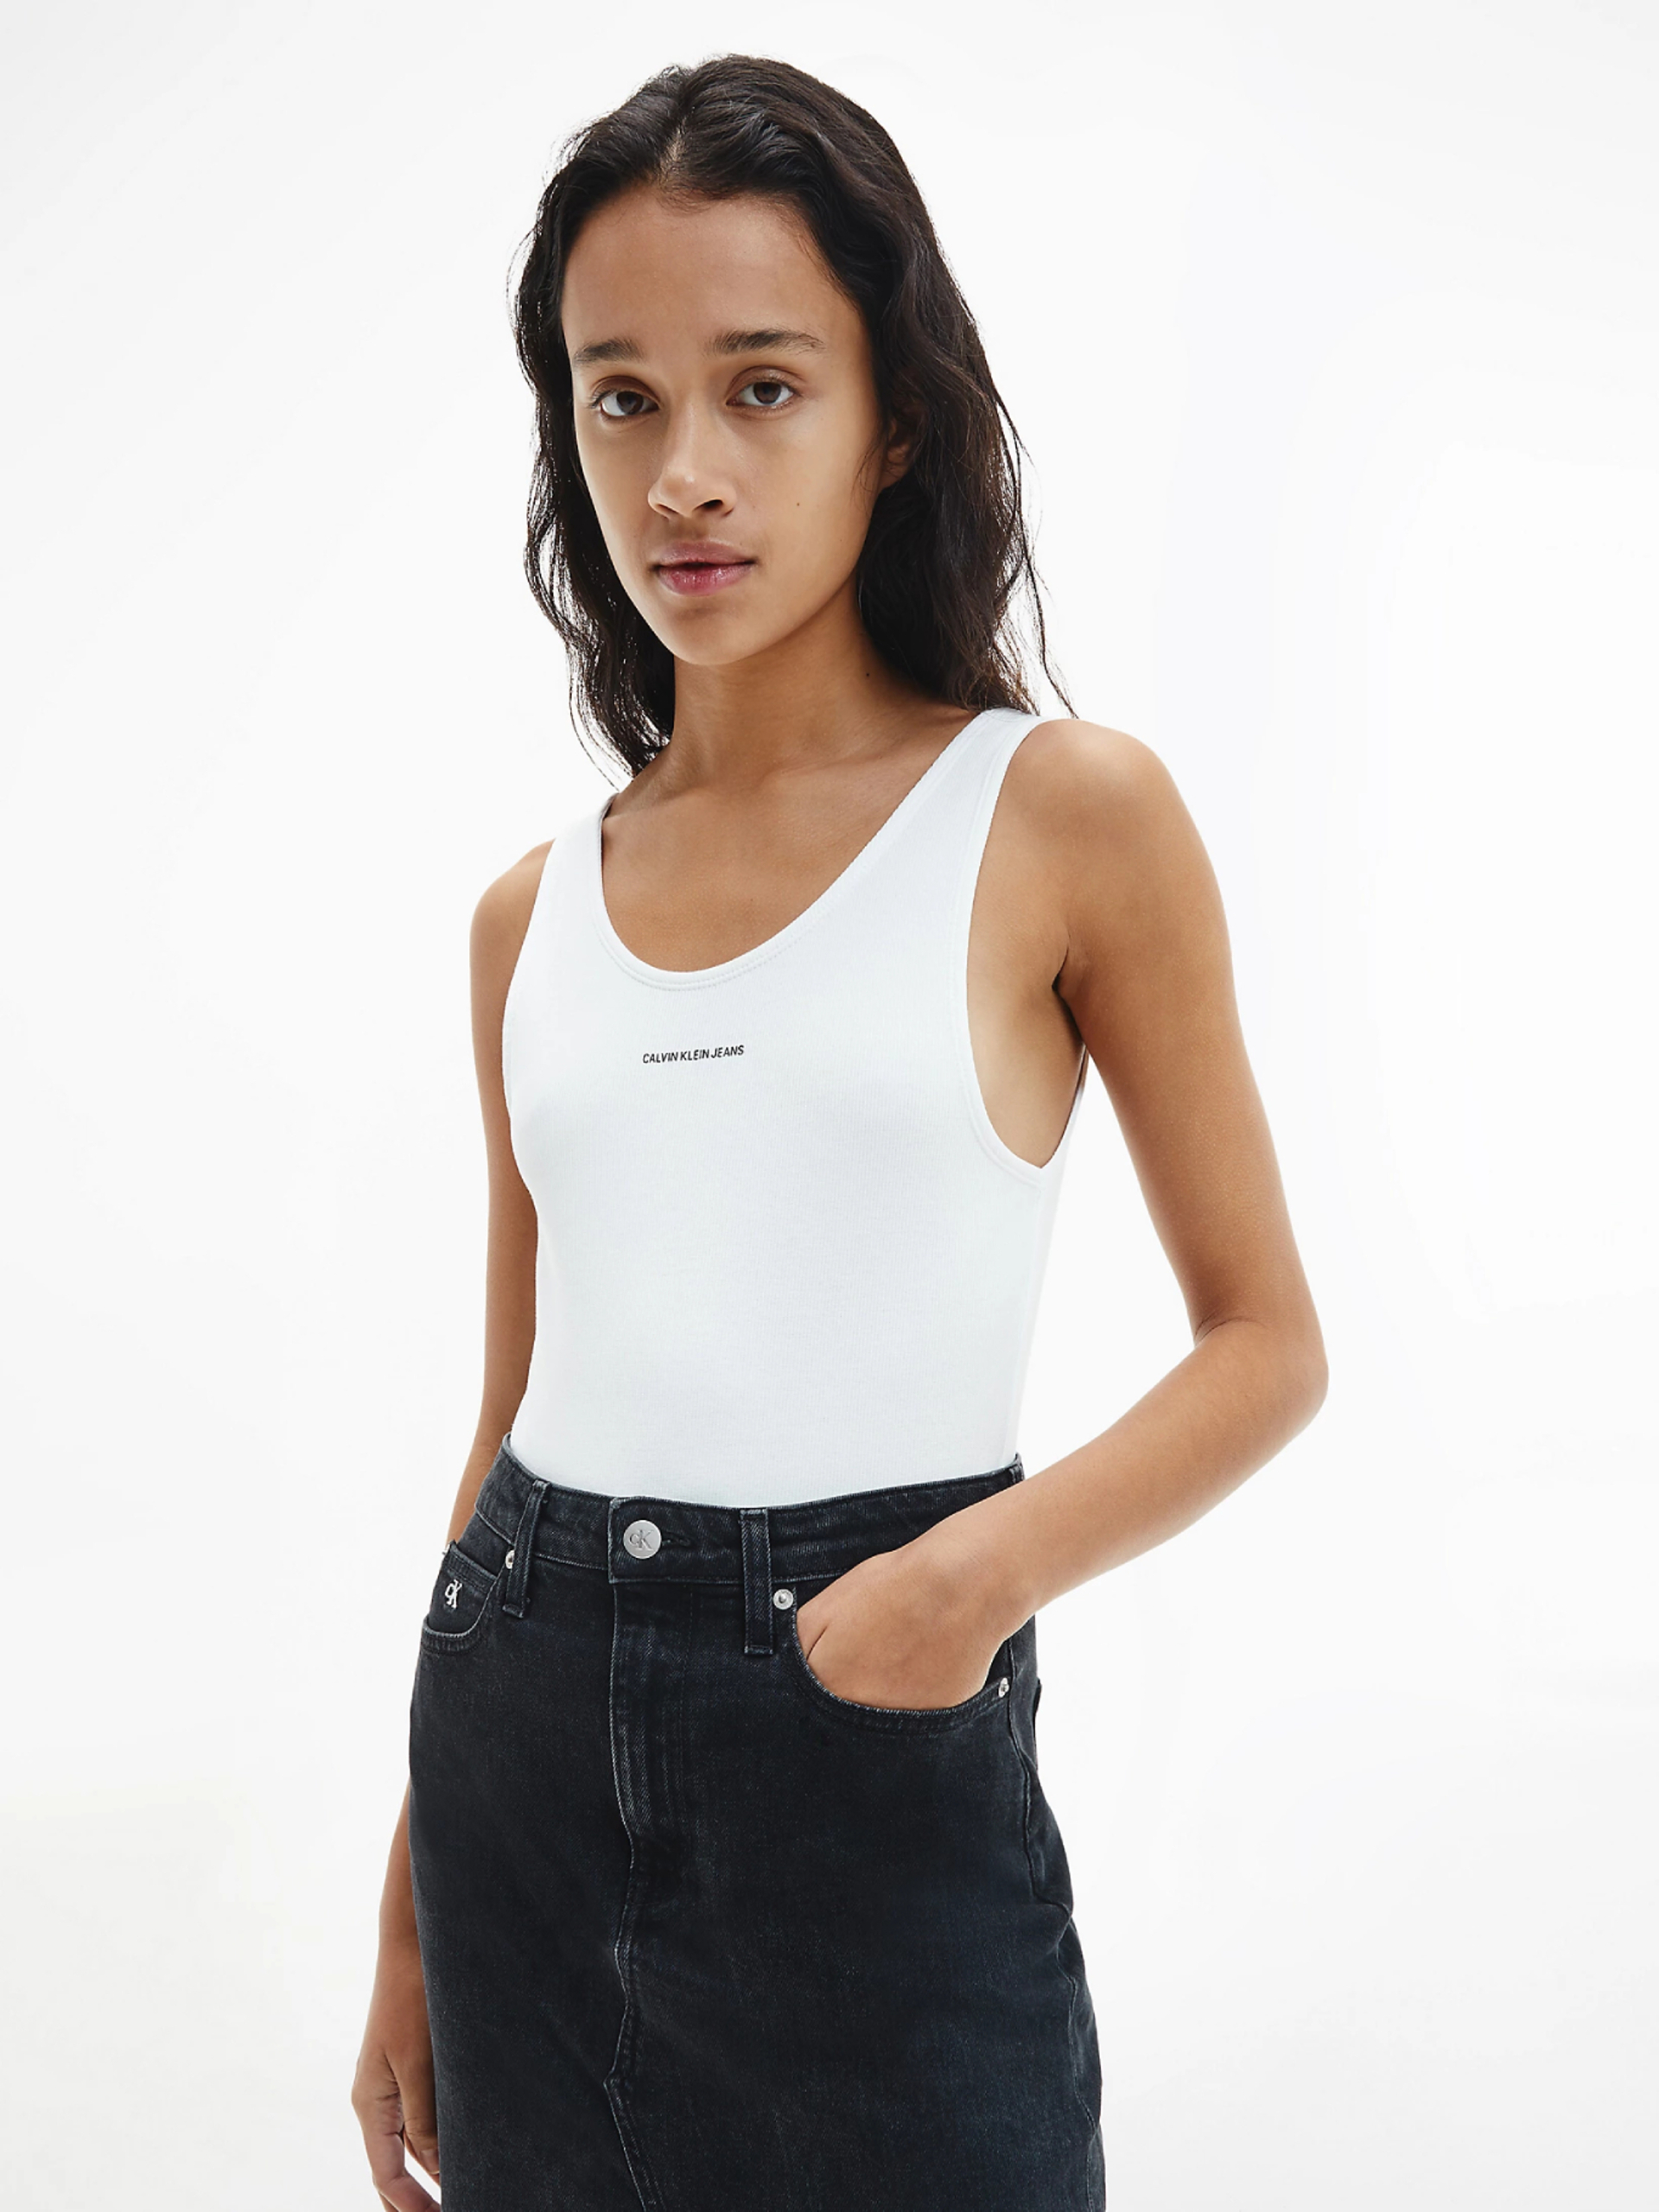 Calvin Klein dámské bílé body - XS (YAF)